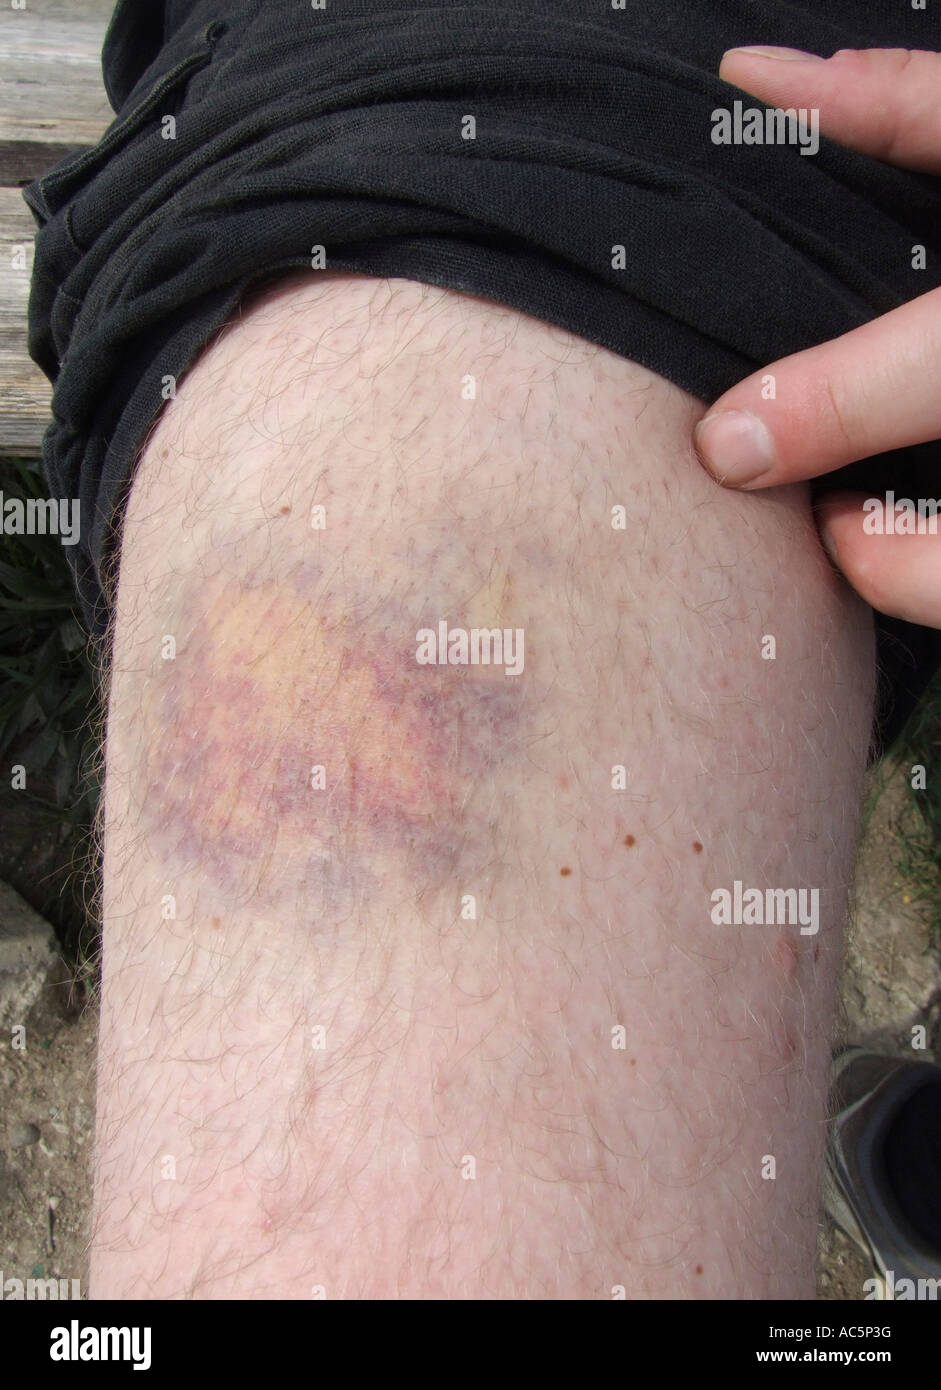 Injured leg close up Stock Photo